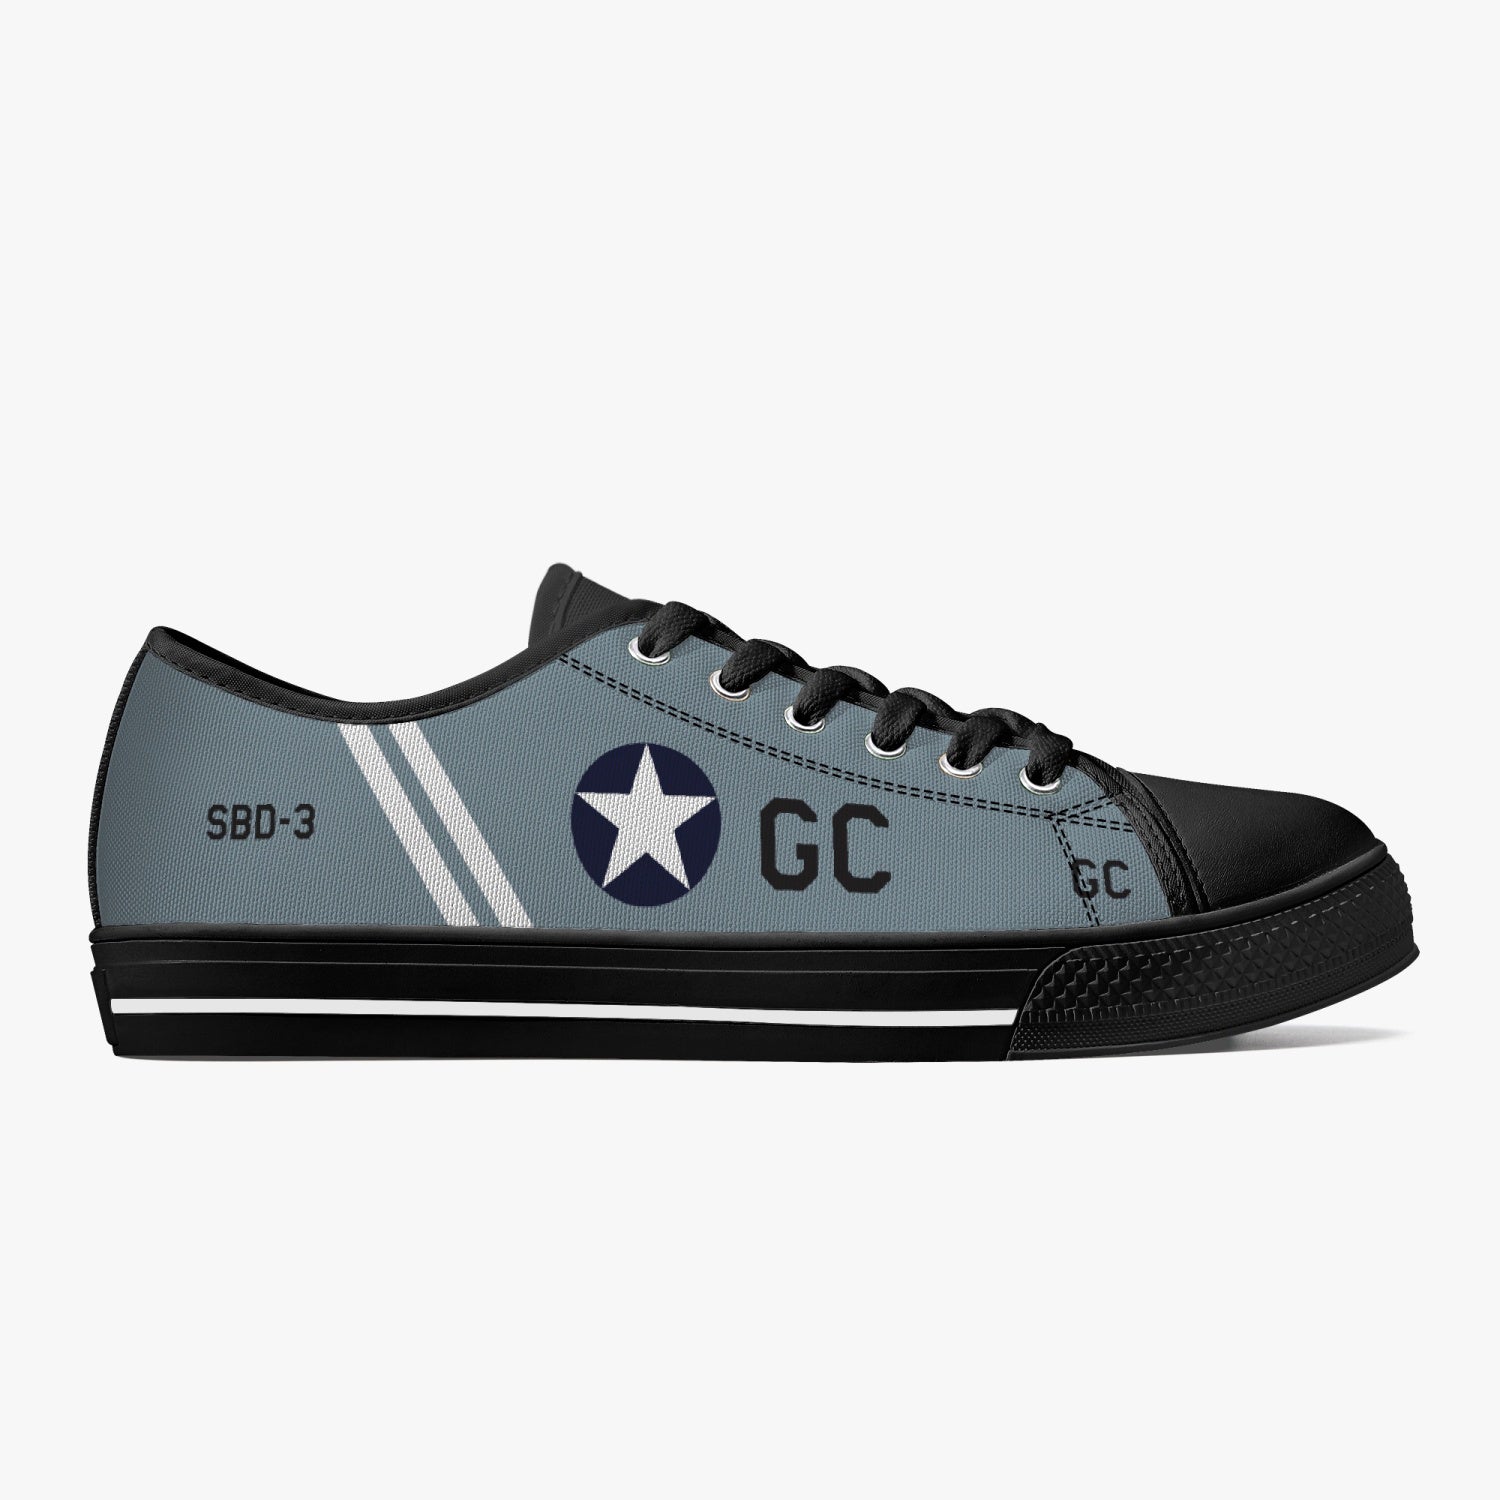 SBD Dauntless "Black GC" Low Top Canvas Shoes - I Love a Hangar